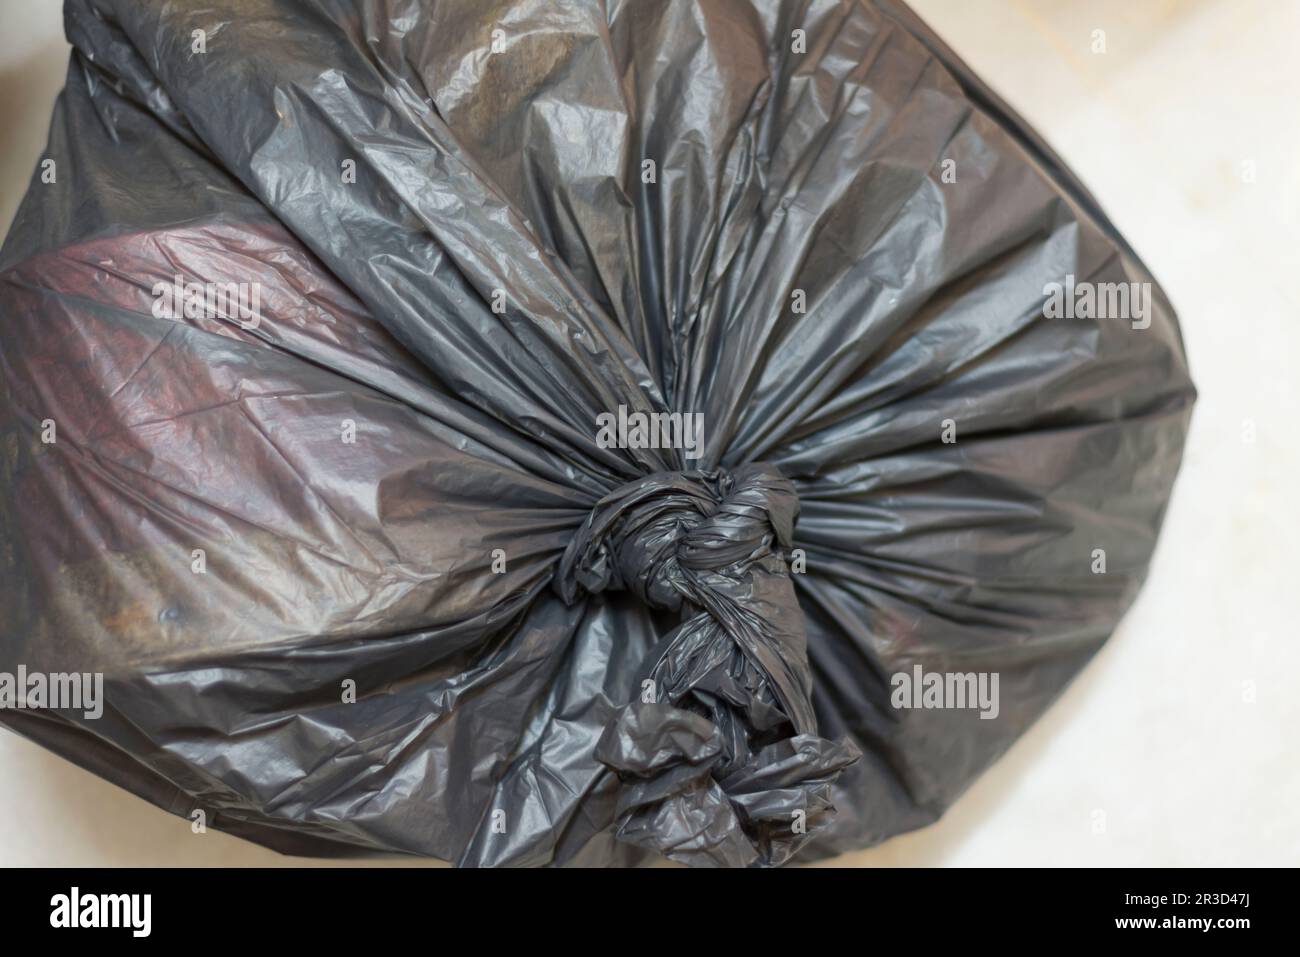 https://c8.alamy.com/comp/2R3D47J/a-knotted-garbage-trash-bag-filled-with-household-waste-2R3D47J.jpg